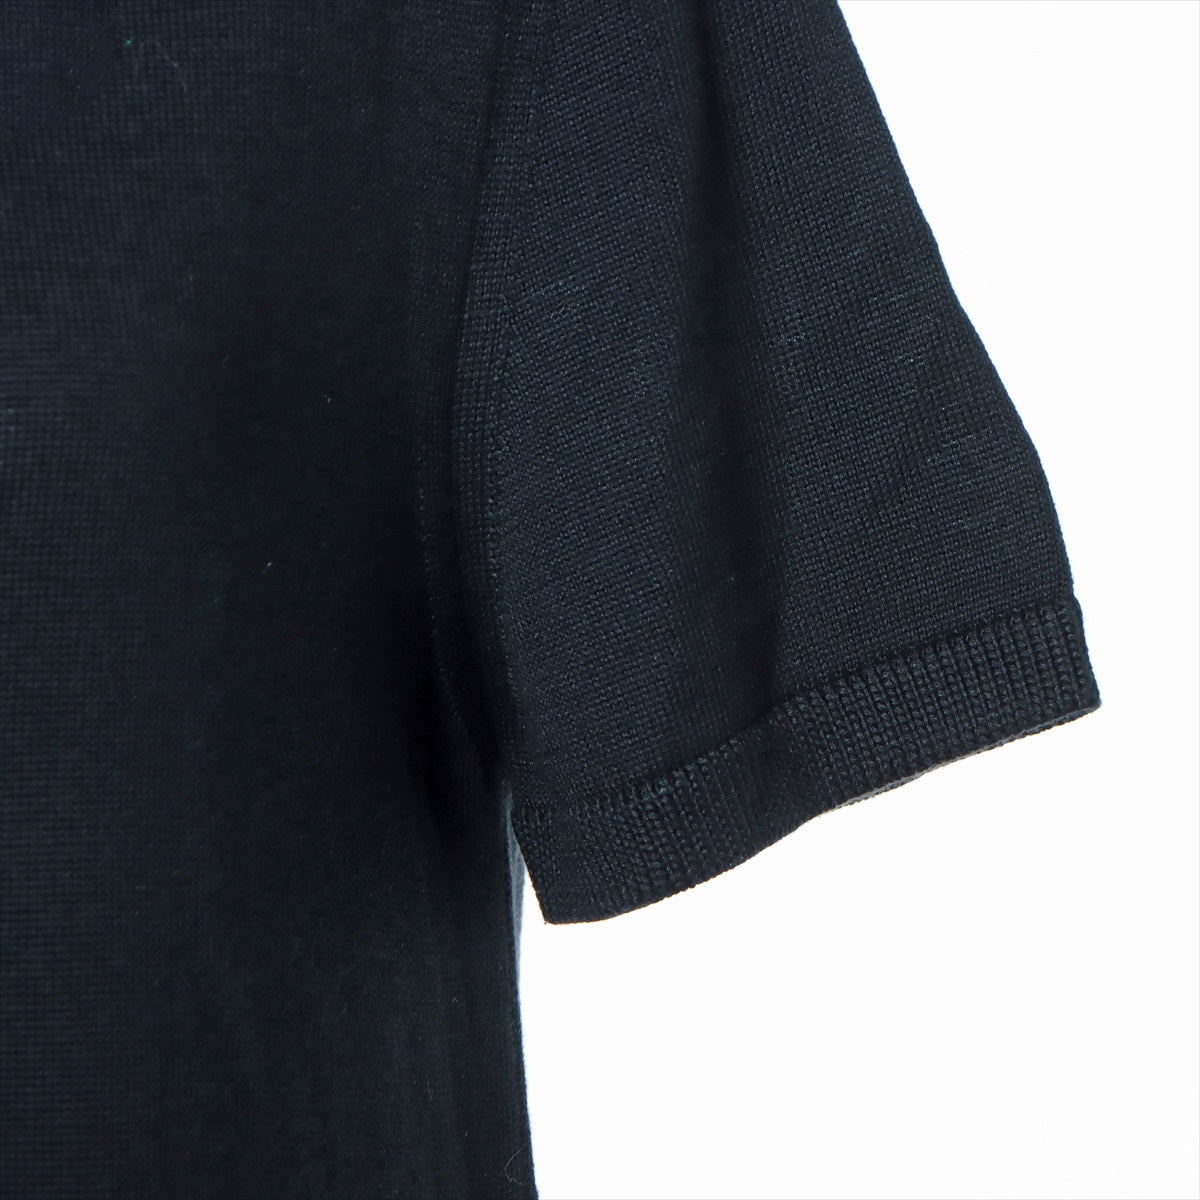 Hermès Cotton & silk Dress 38 Black